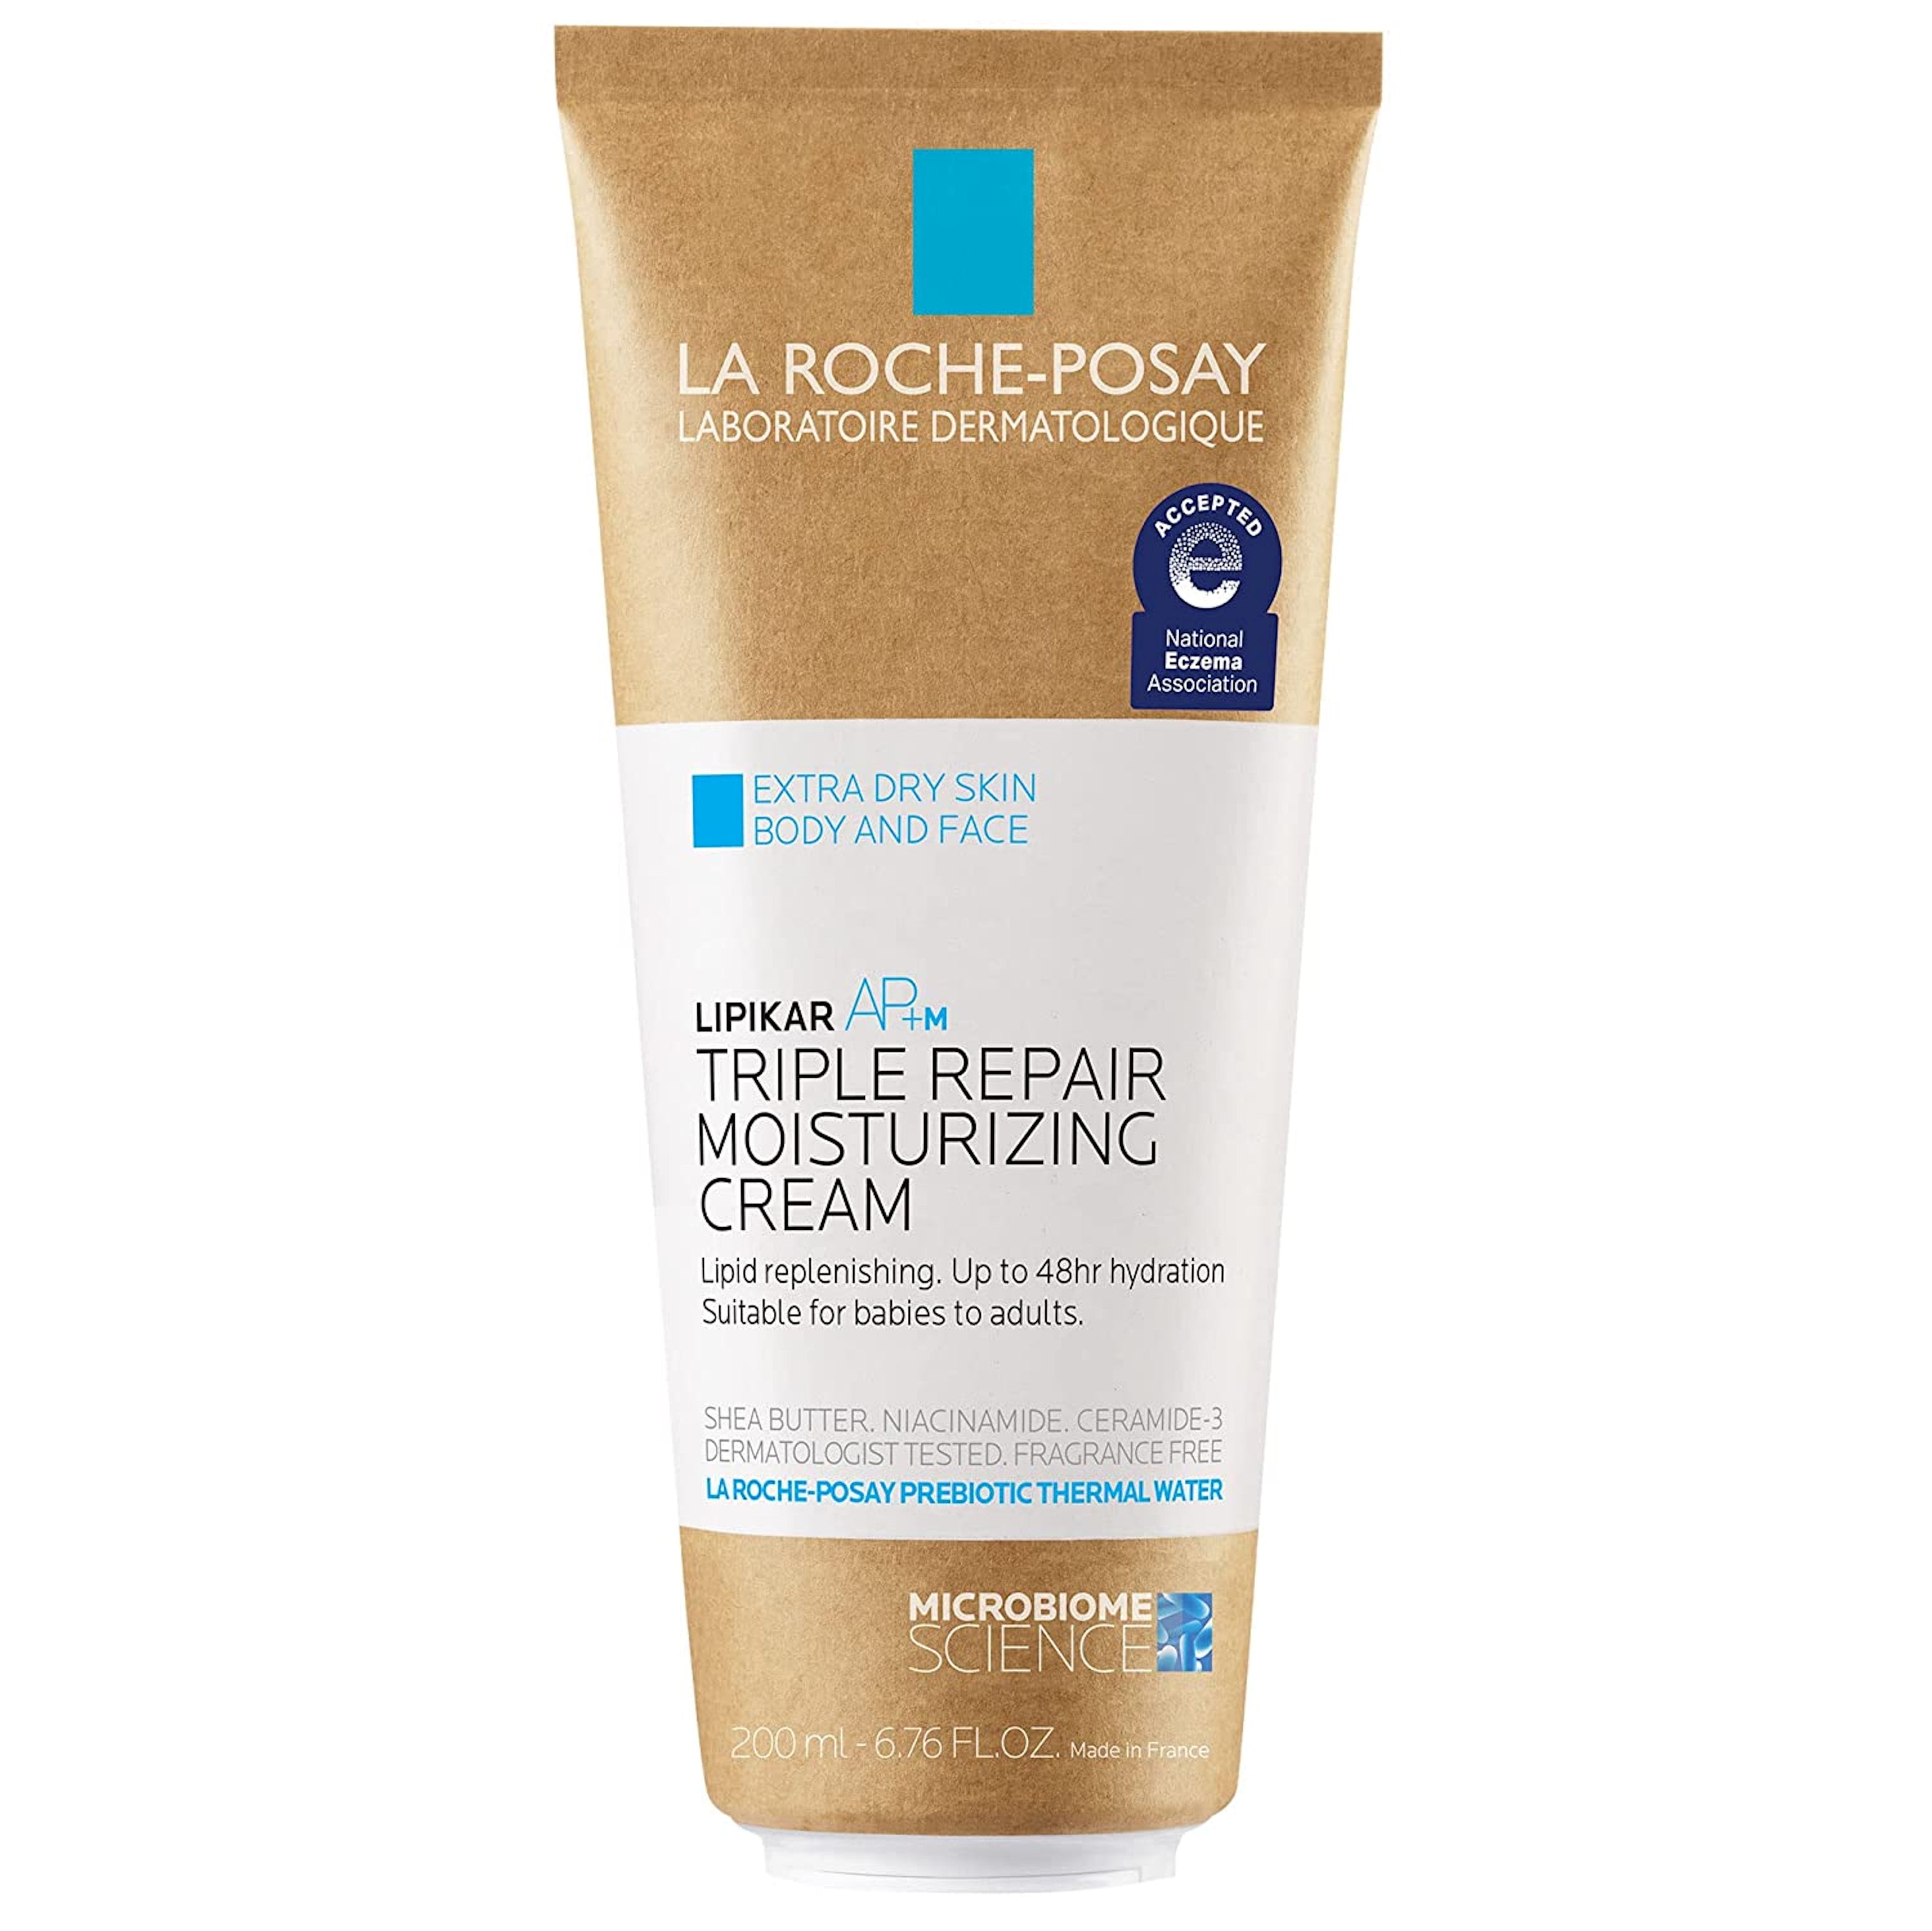 Monica Verstikkend kiezen La Roche-Posay Lipikar AP+M Triple Repair Moisturizing Cream for Extra Dry  Skin 6.76 fl oz (200ml) - Walmart.com